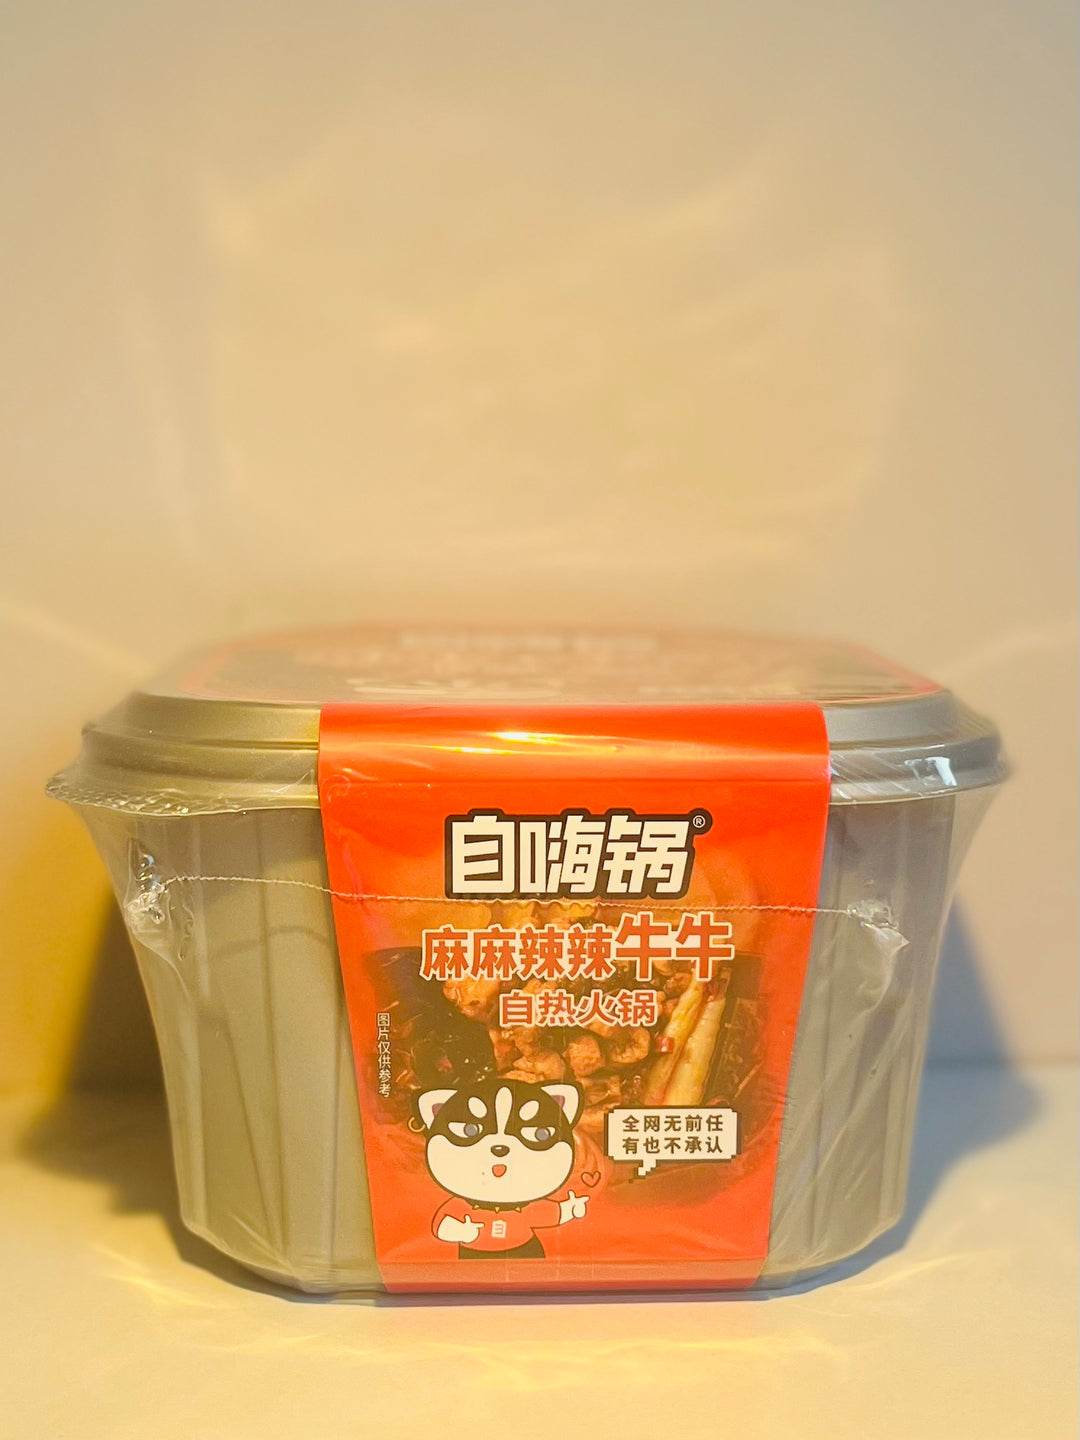 自嗨锅麻辣牛肉自热火锅218g ZHG Instant Hot Pot Spicy Beef Flavour